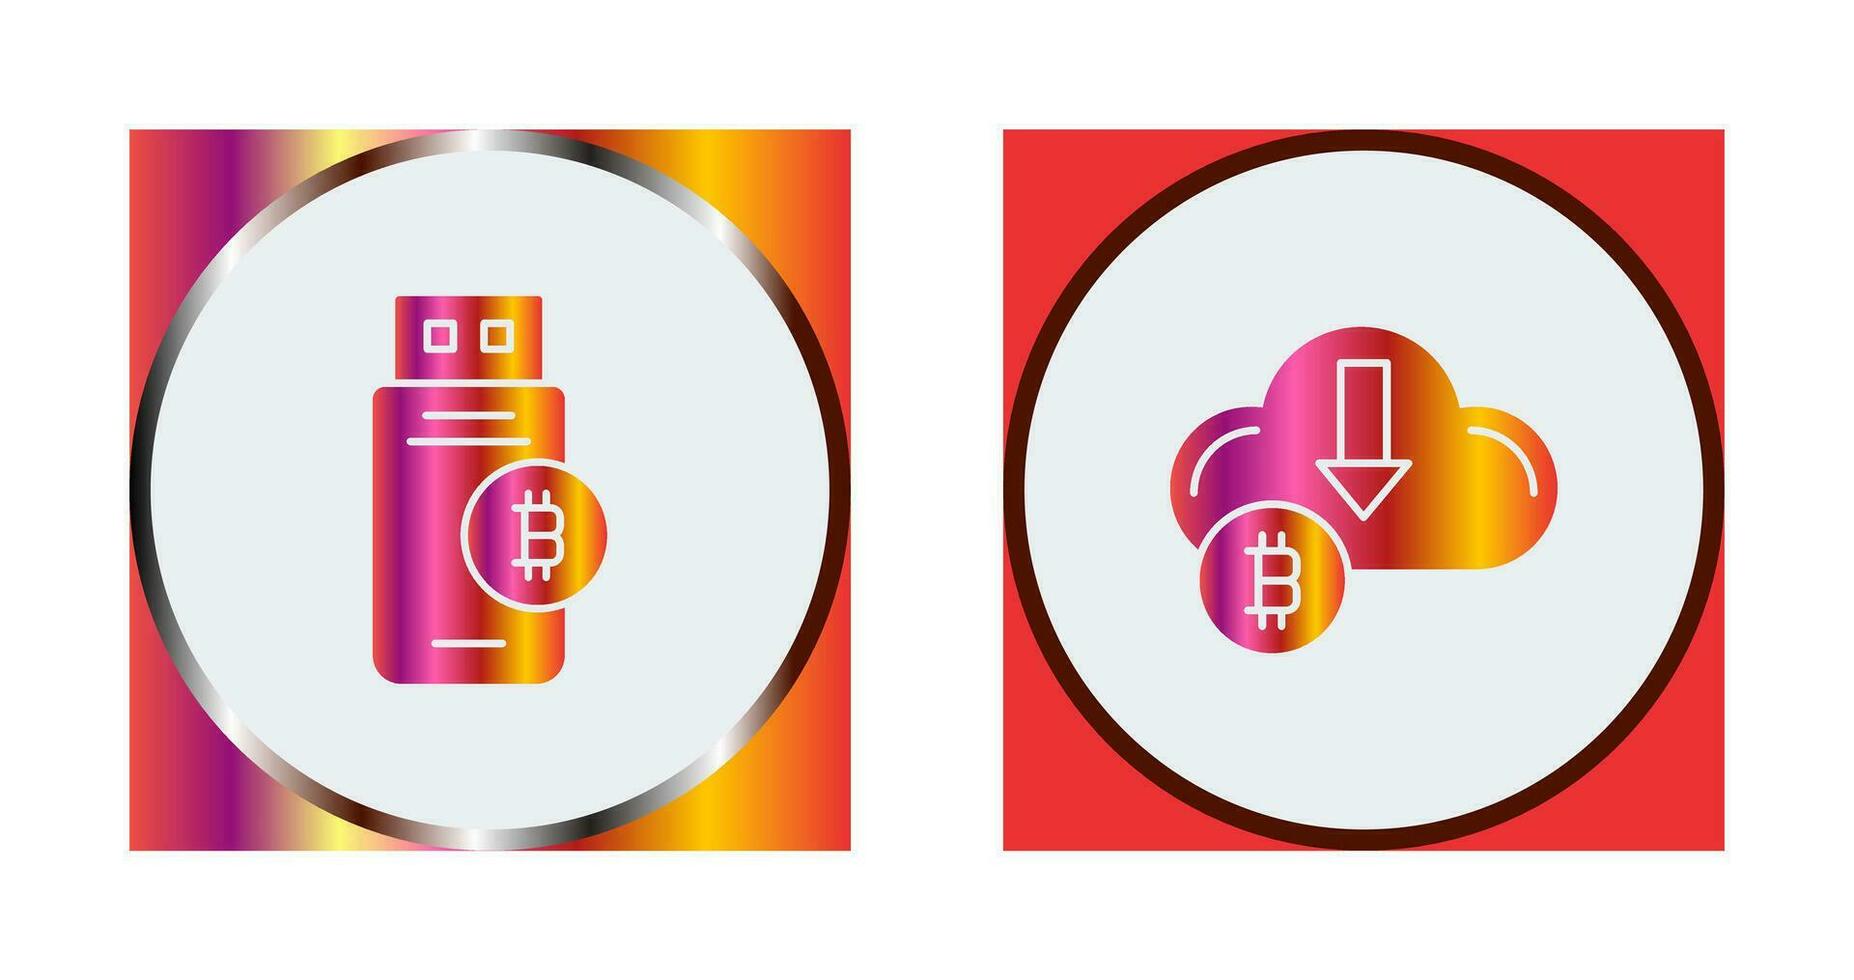 Bitcoin Usb Device and Down Arrow Icon vector